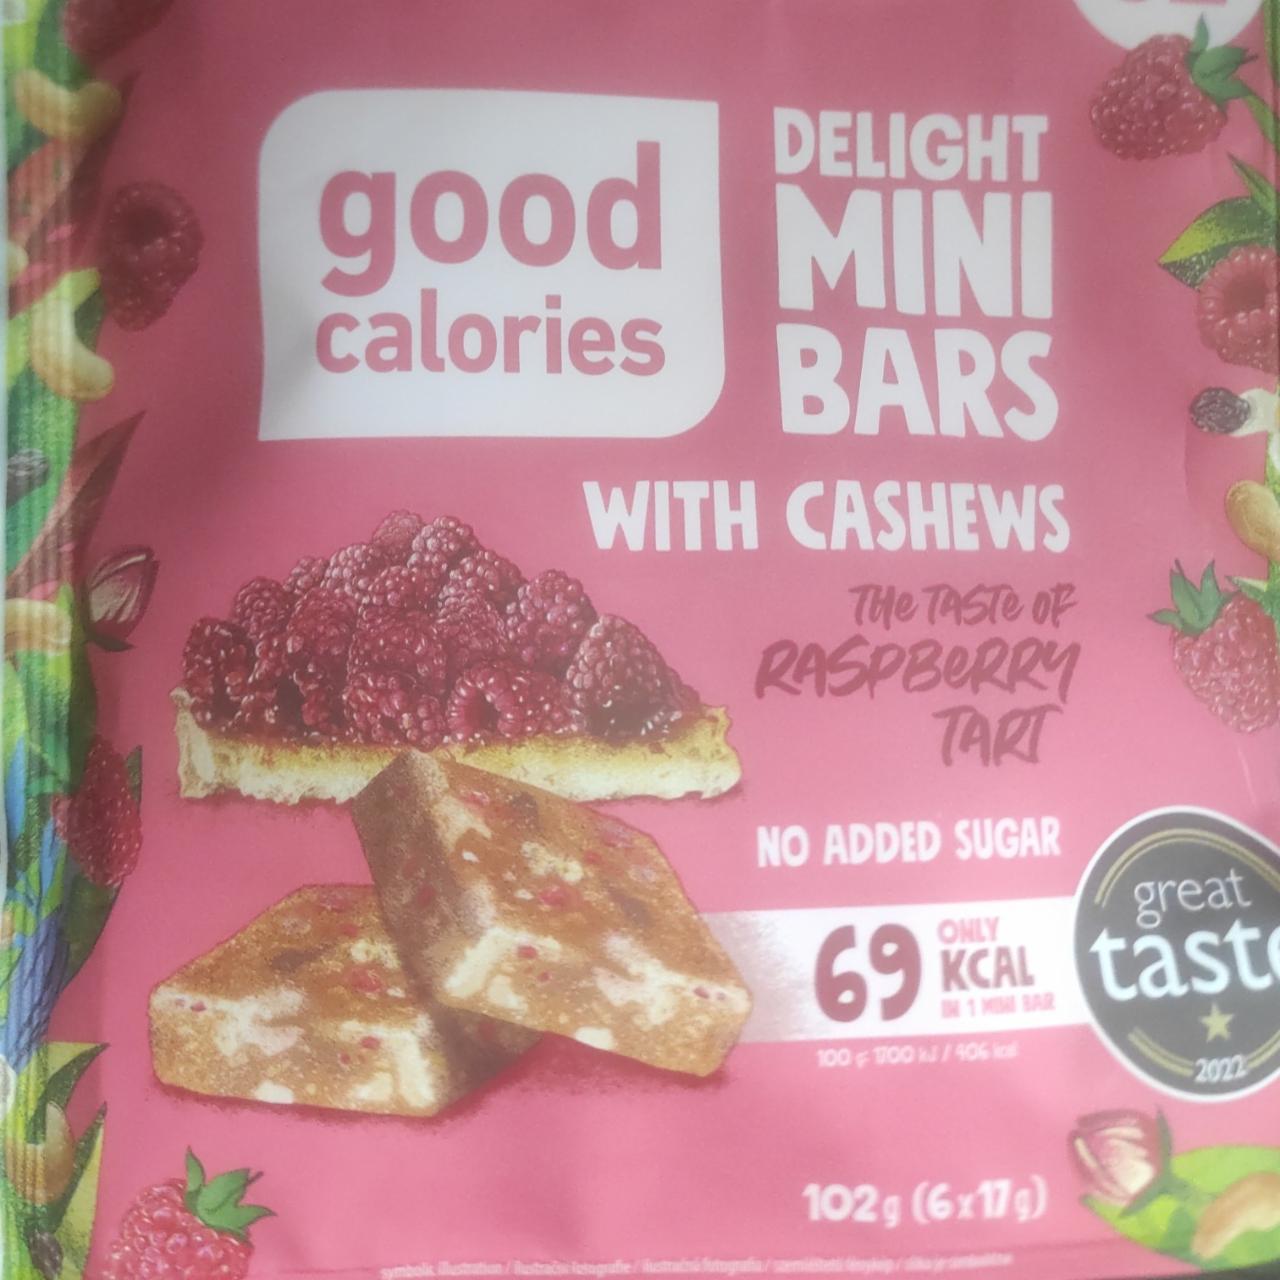 Zdjęcia - Delight mini bars with cashews Good calories